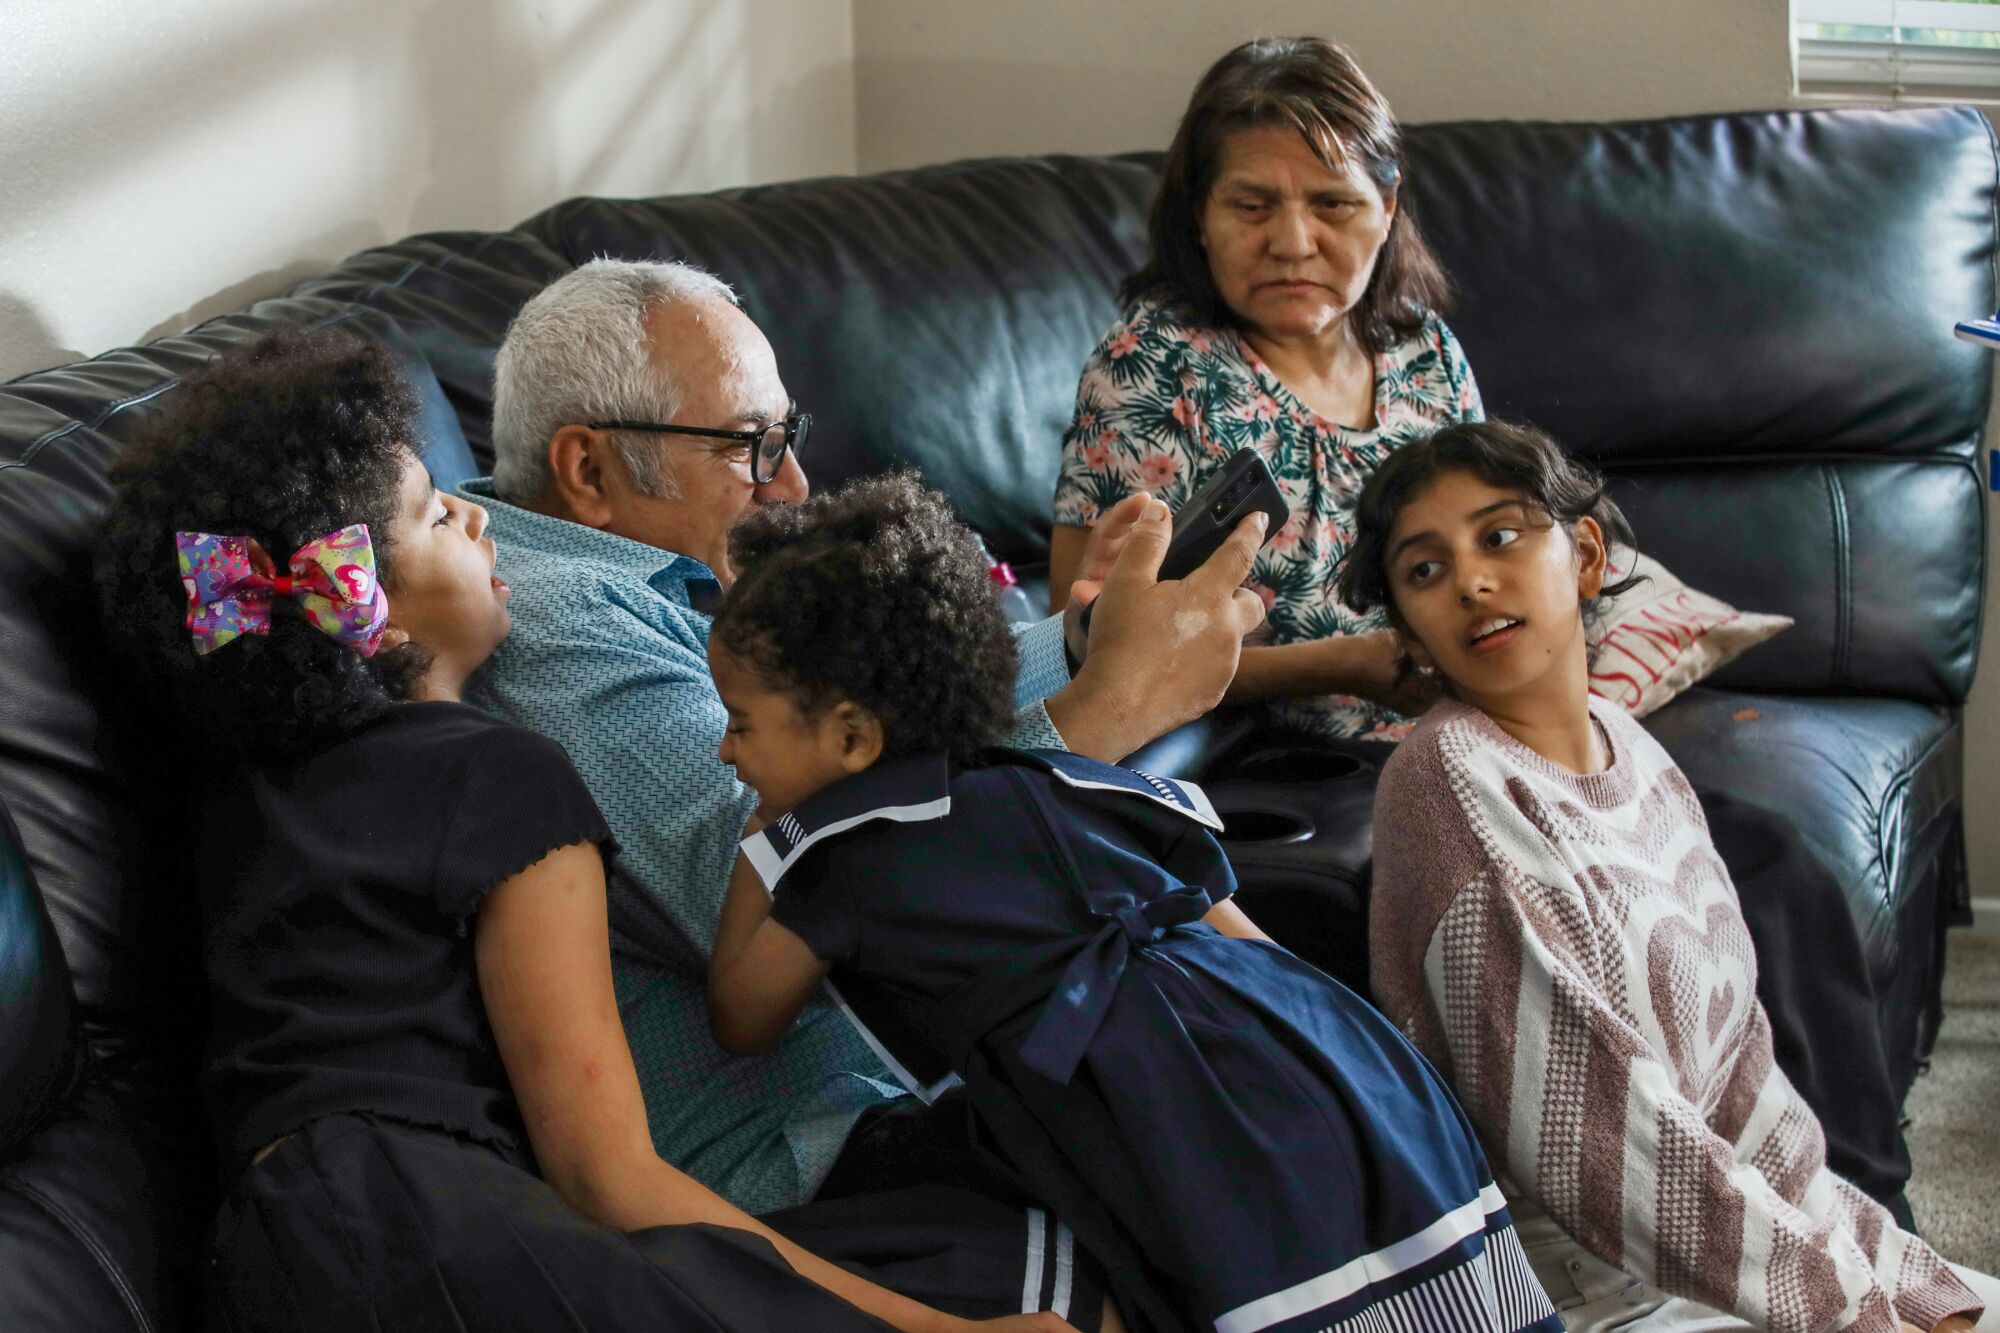 Children surround their grandparents on a couch